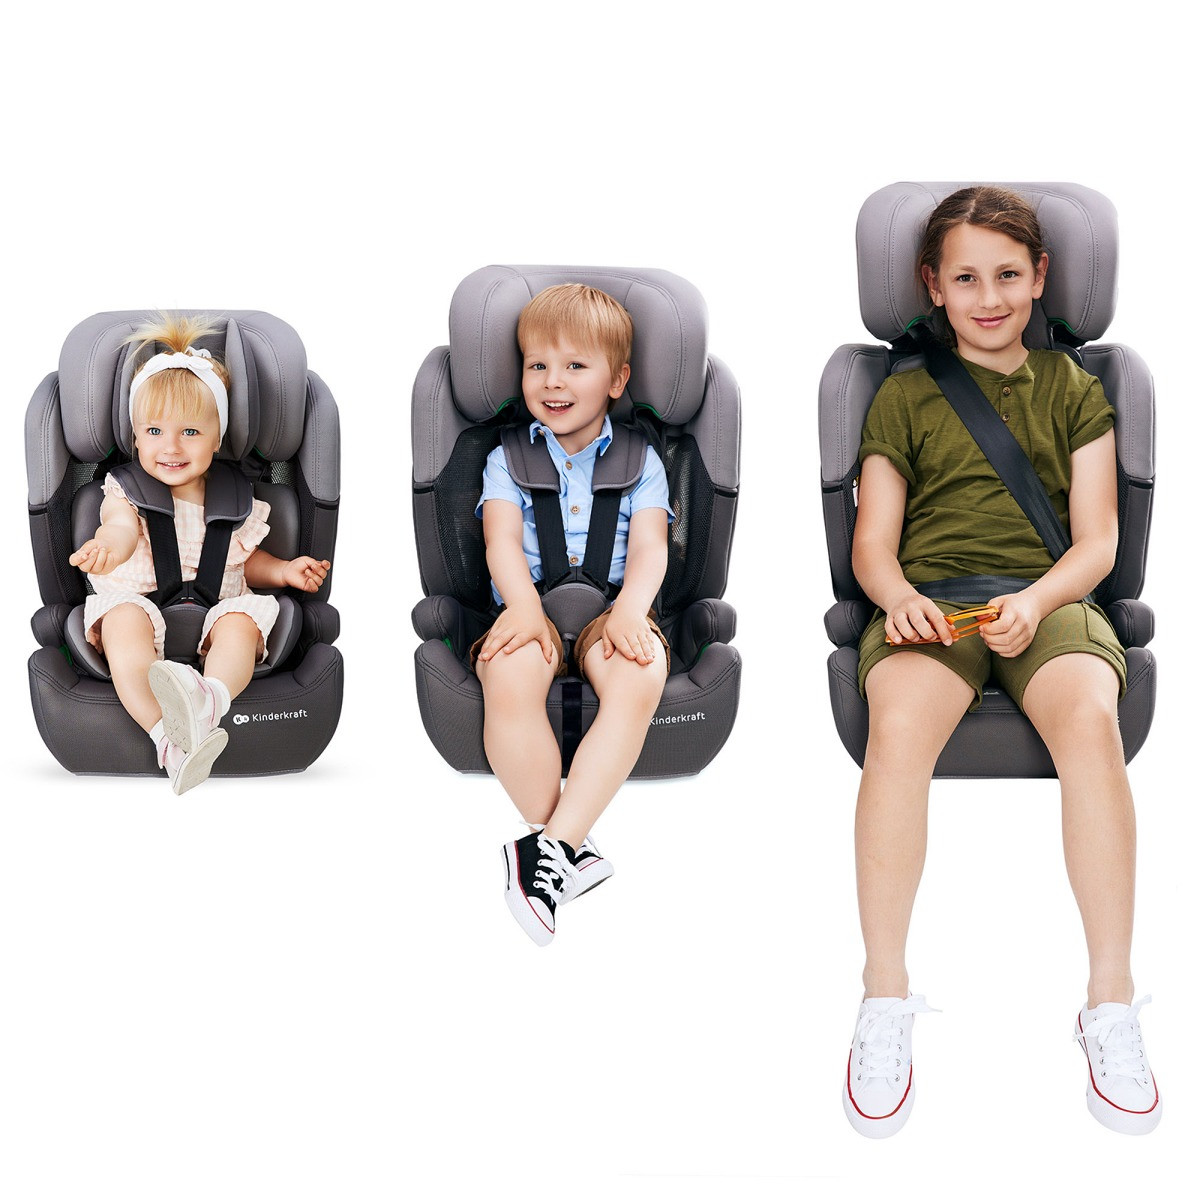 Kinderkraft Siège auto Comfort UP, siège enfant rehausseur I-Size